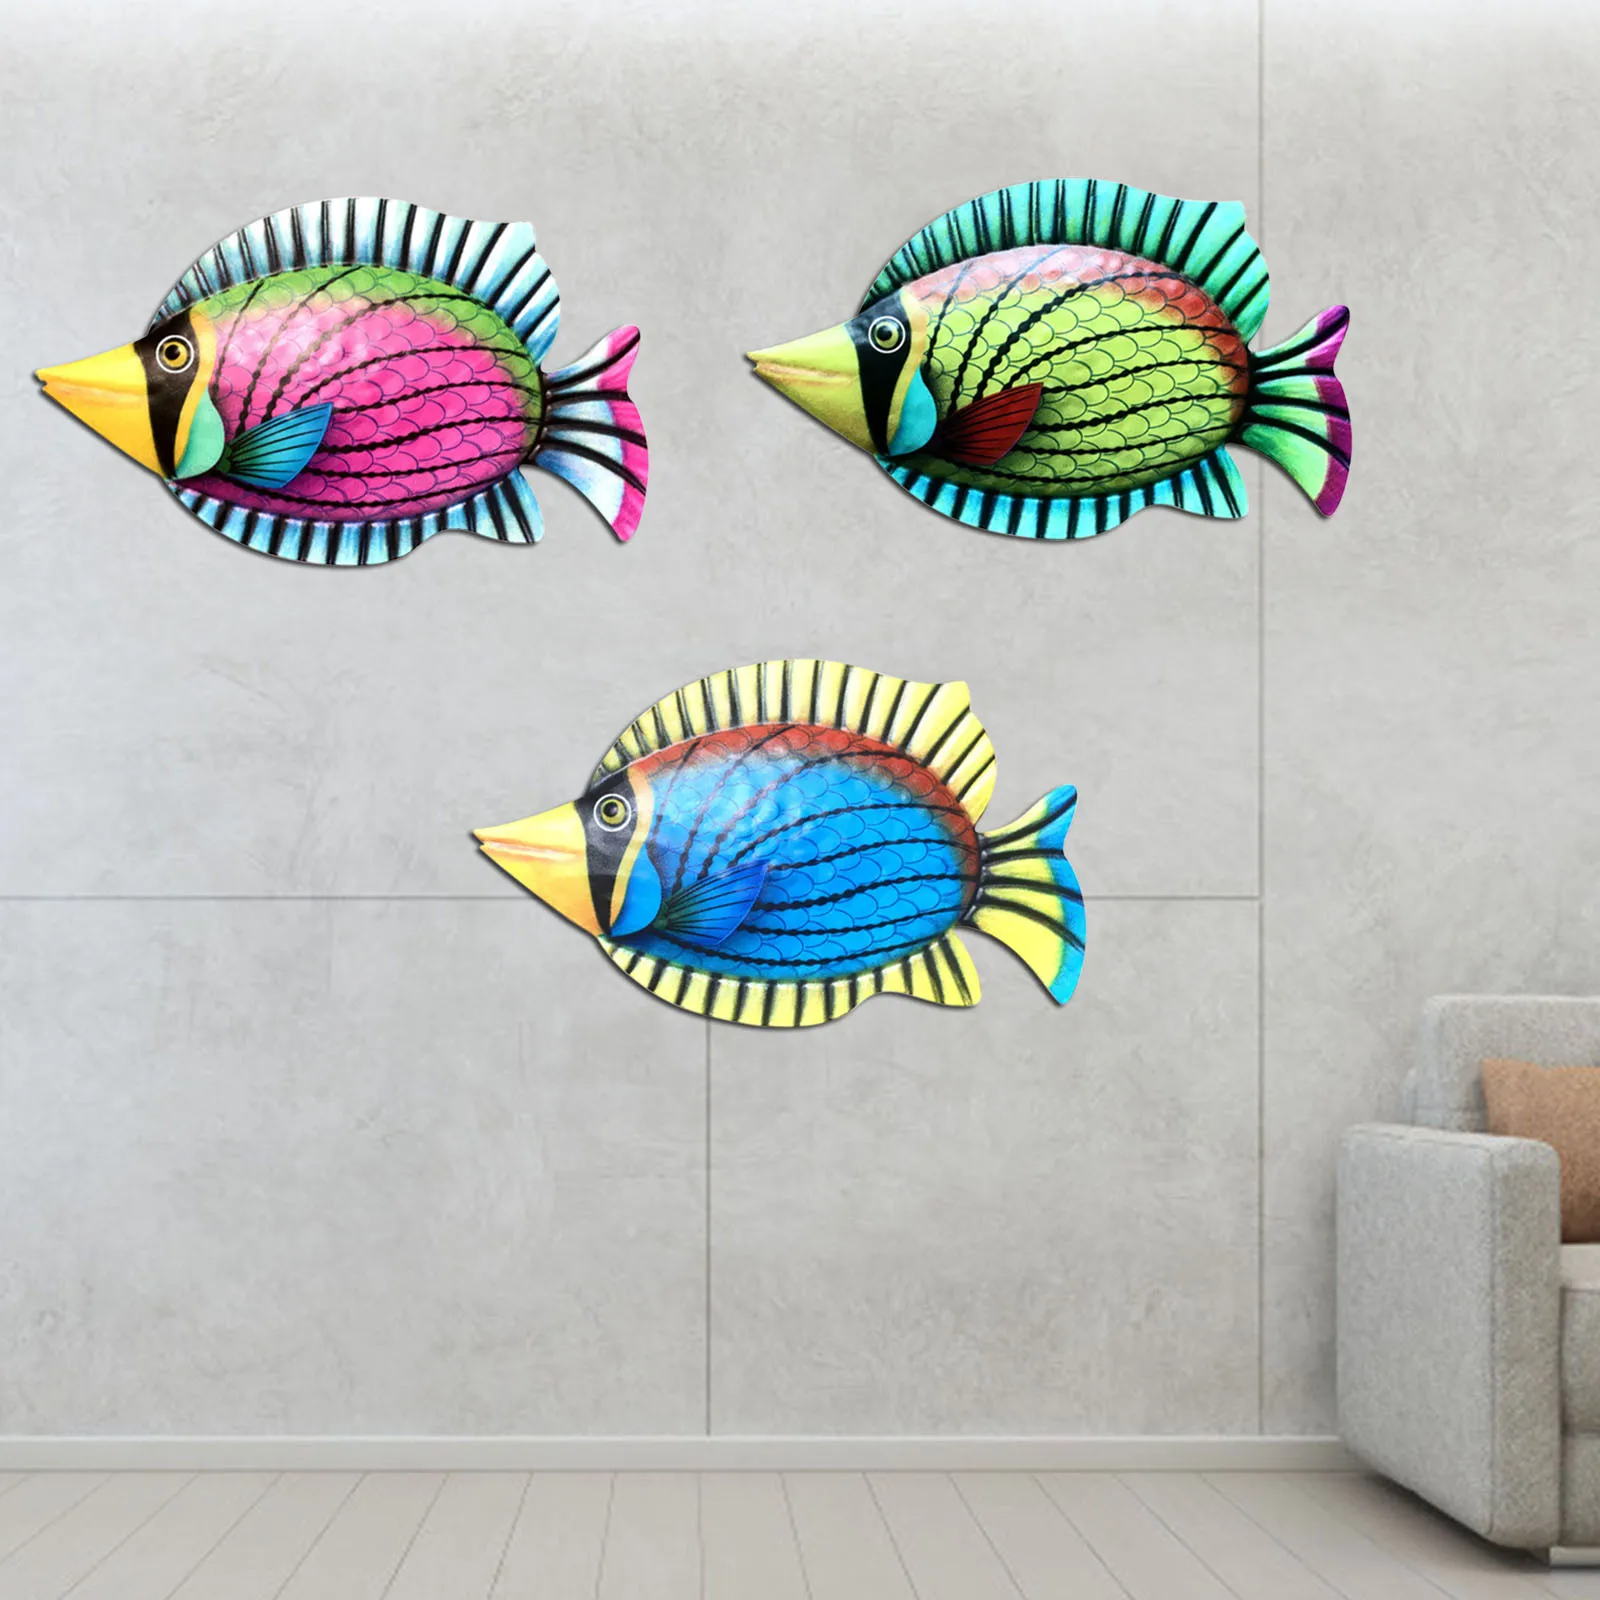 Iron Art Crafts Indoor Outdoor Metal Fish Easy Install Home Garden Wall Decor 